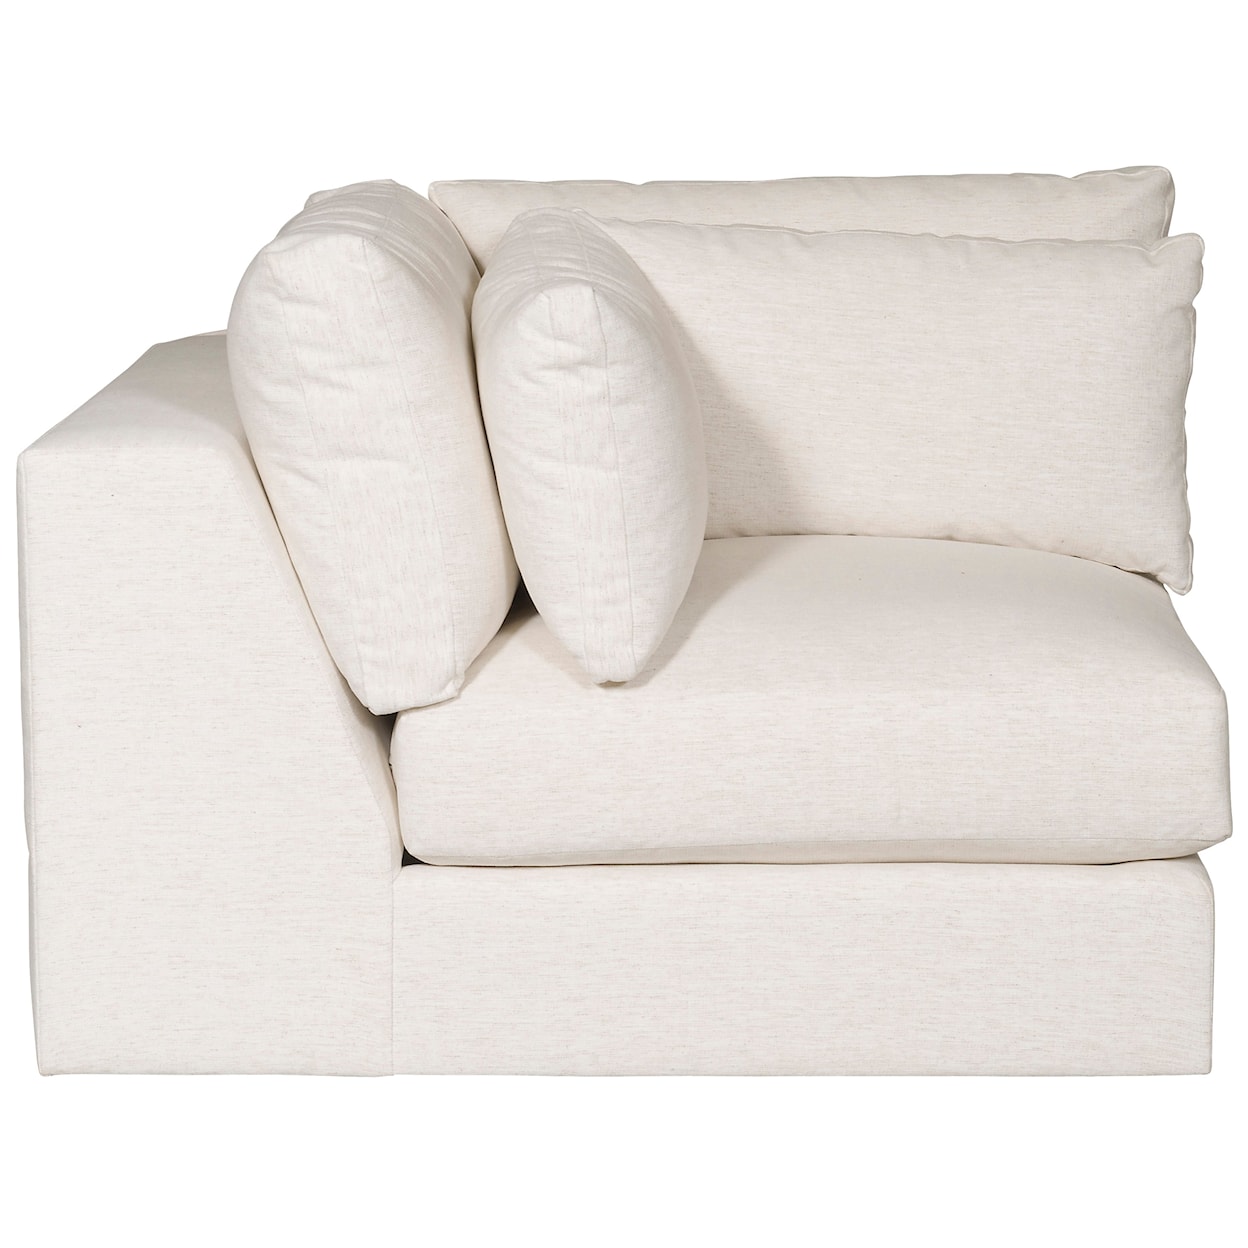 Vanguard Furniture Leone Upholstered Sofa